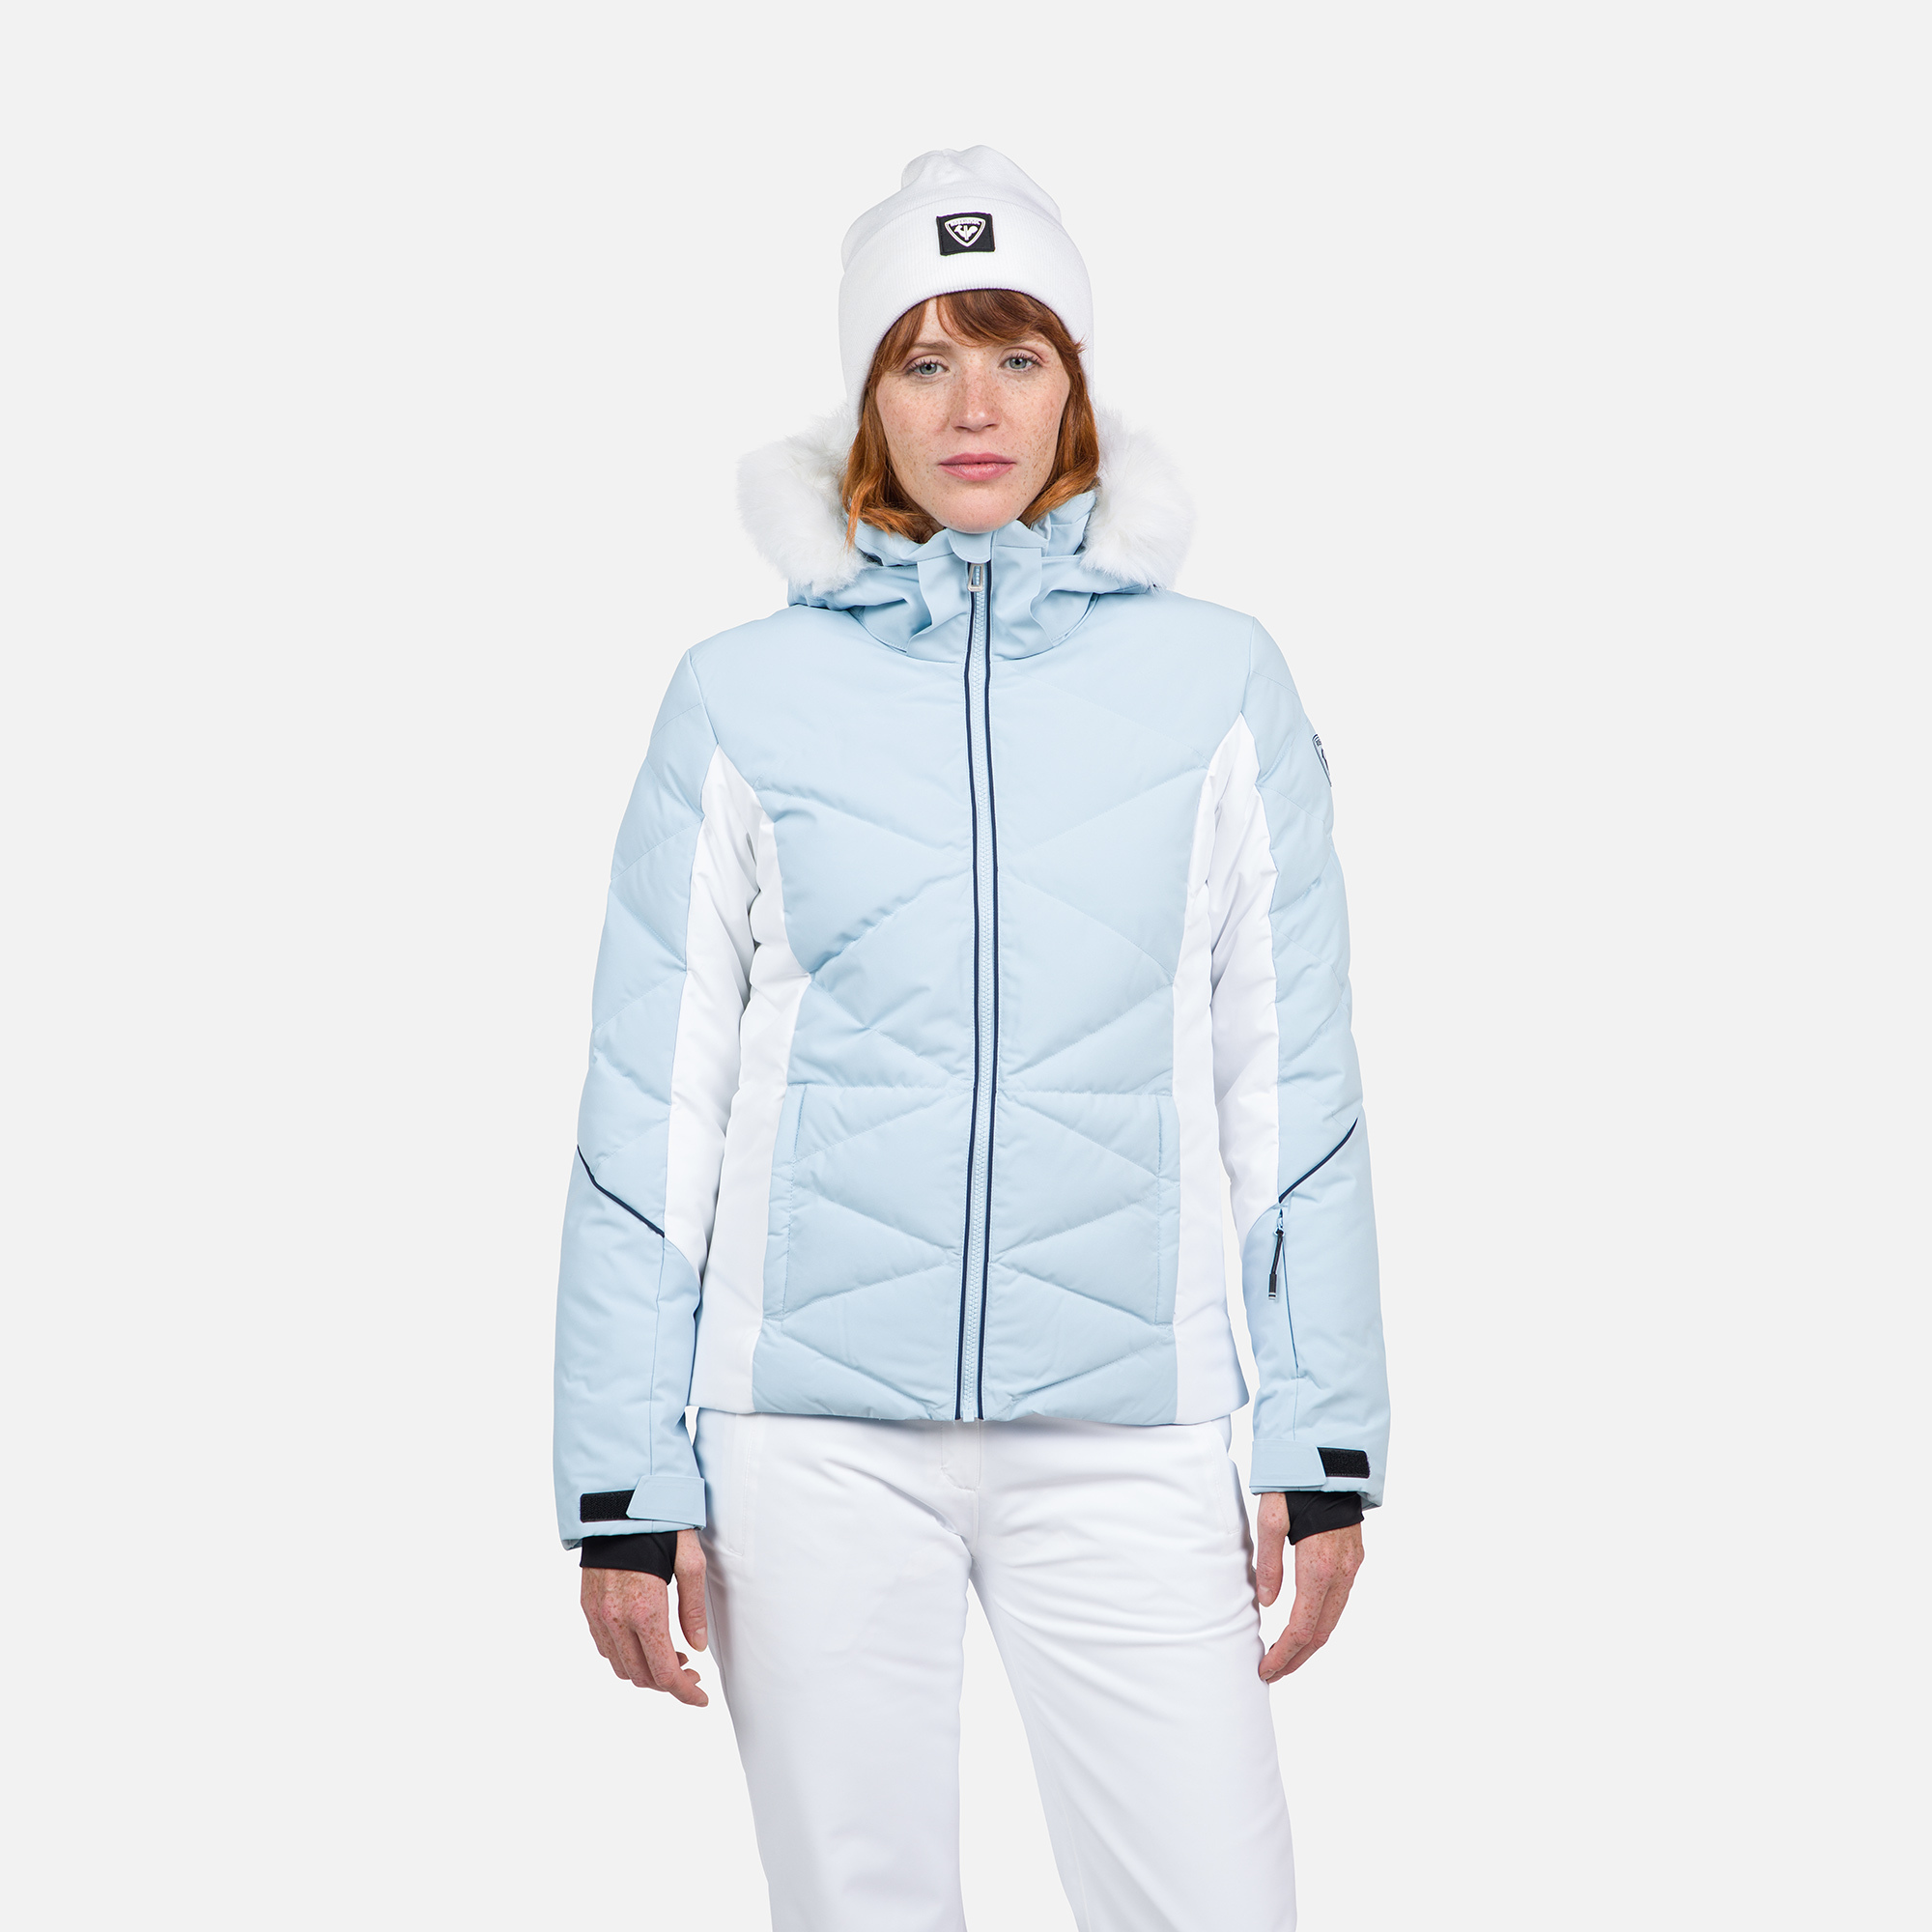 Keilberg Ski jacket Women